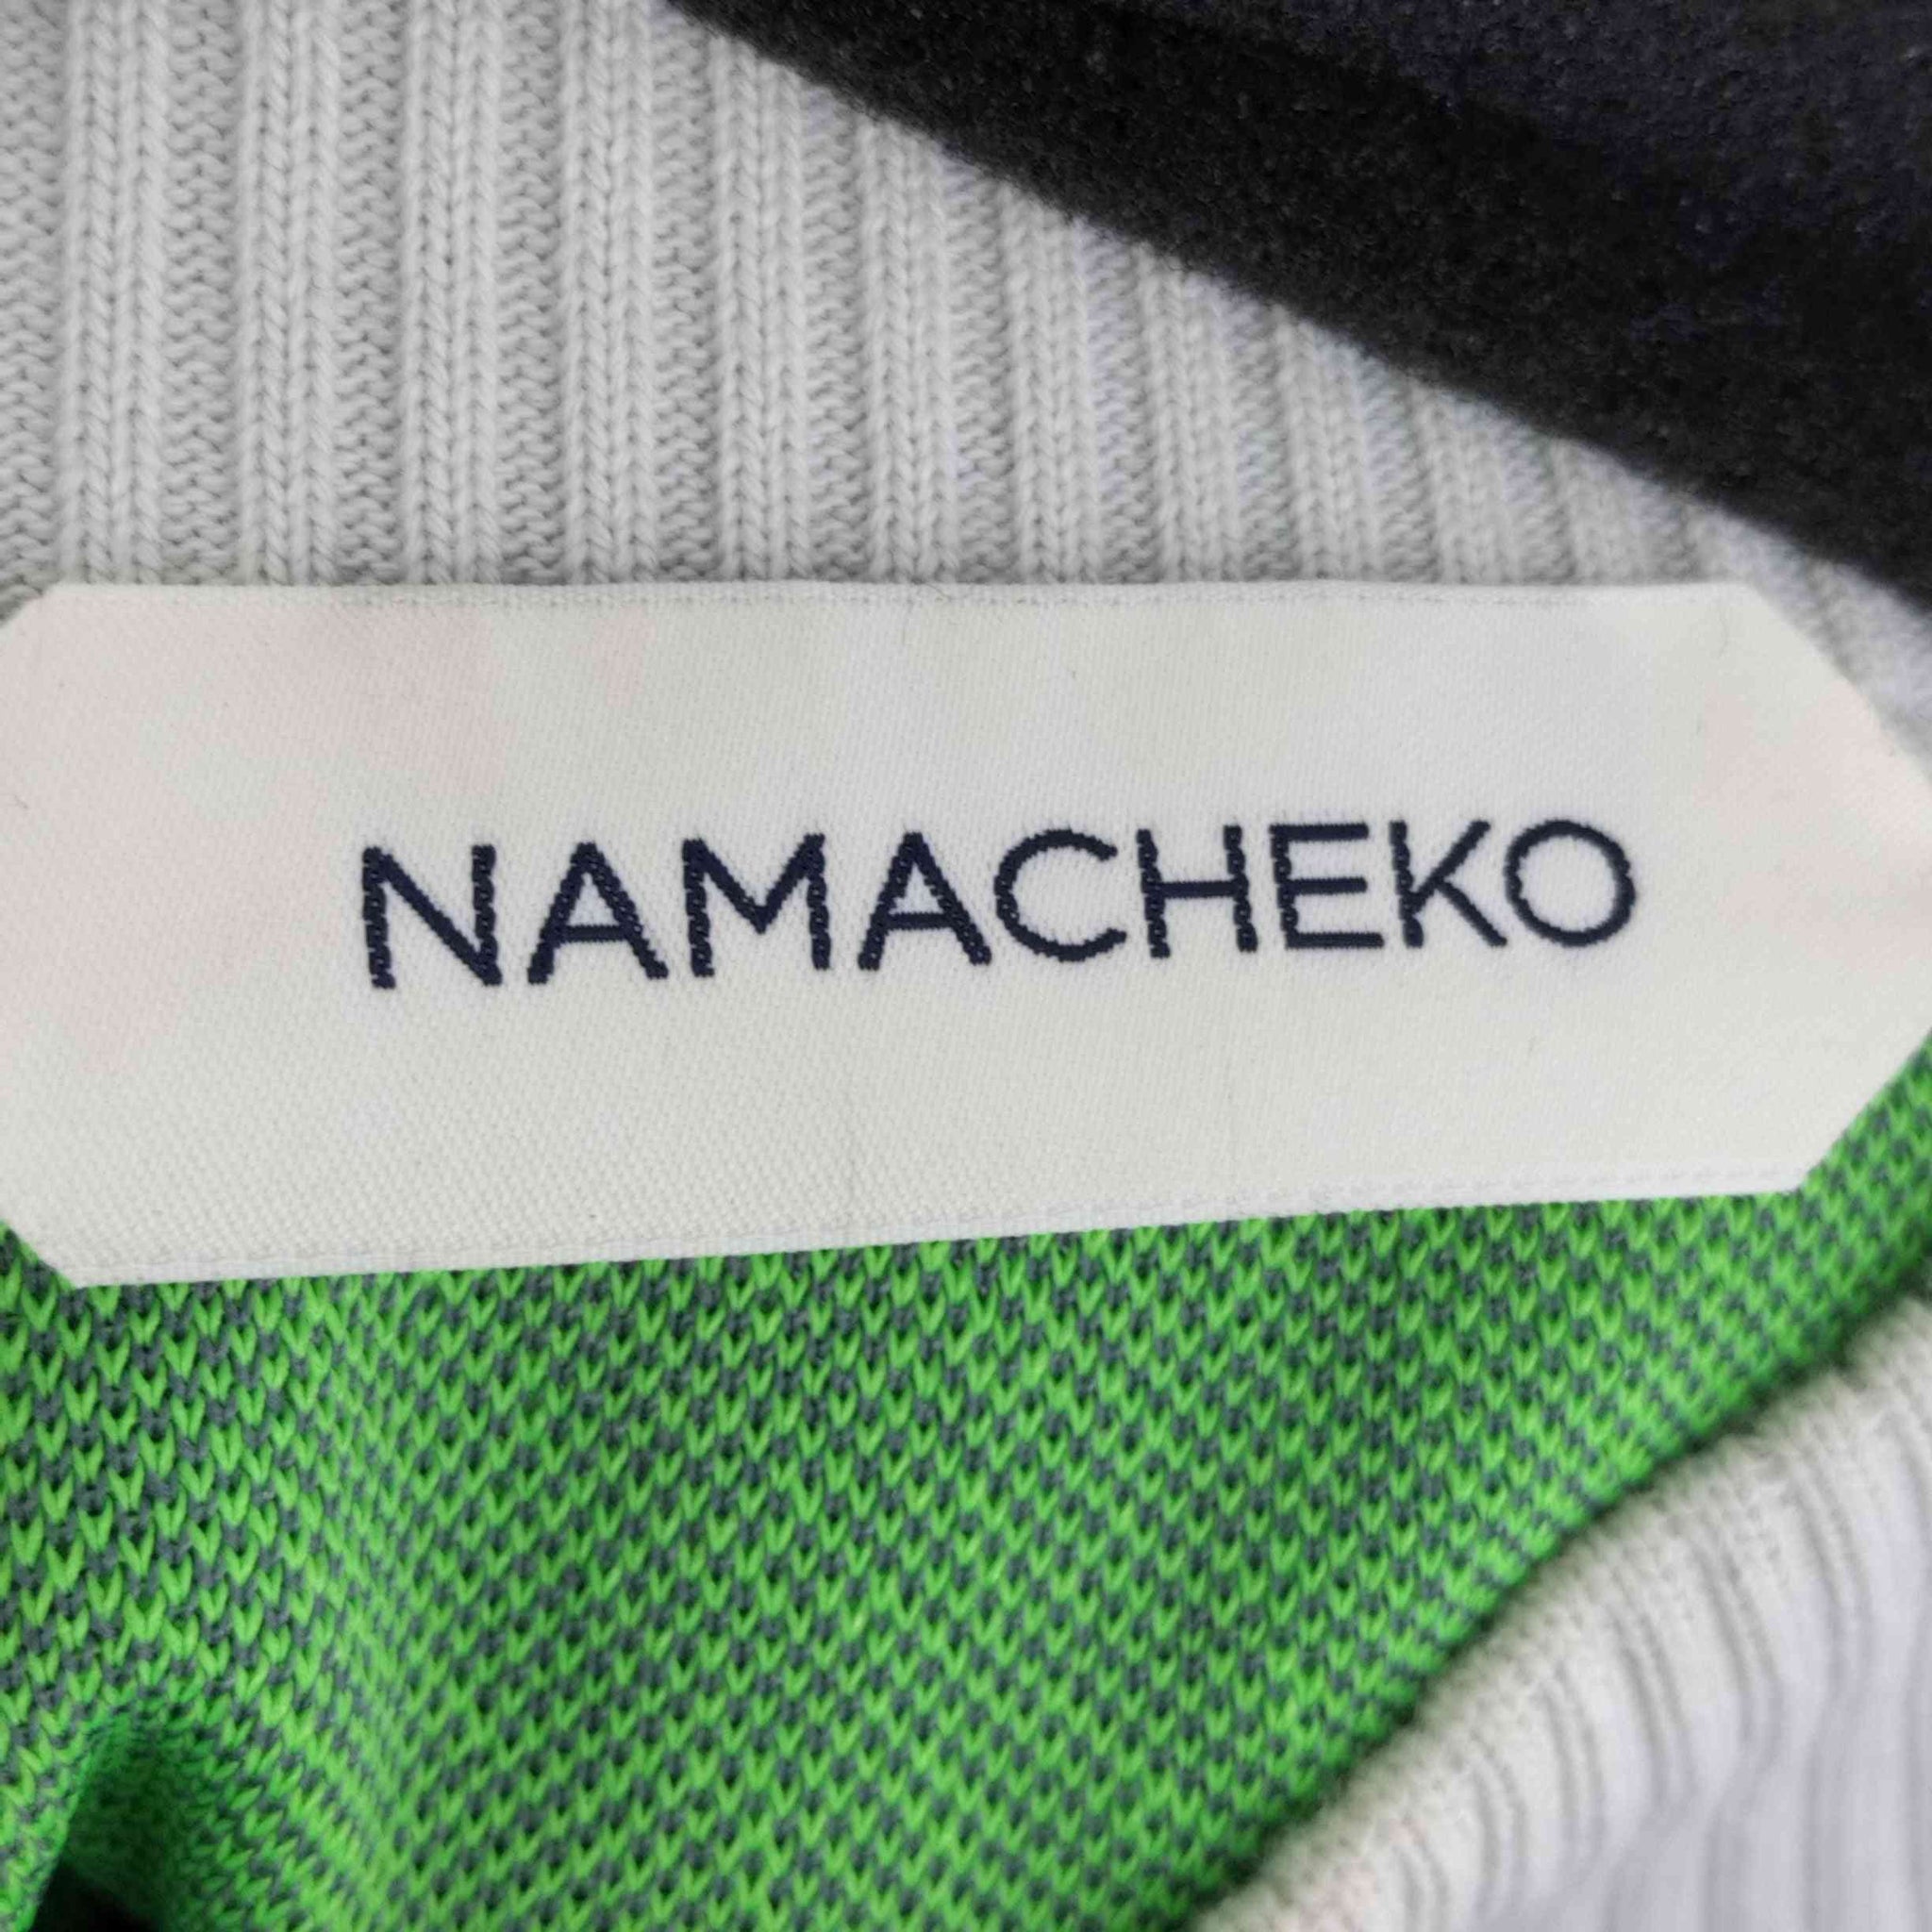 NAMACHEKO(ナマチェコ)Oonga Shirt レイヤードニット